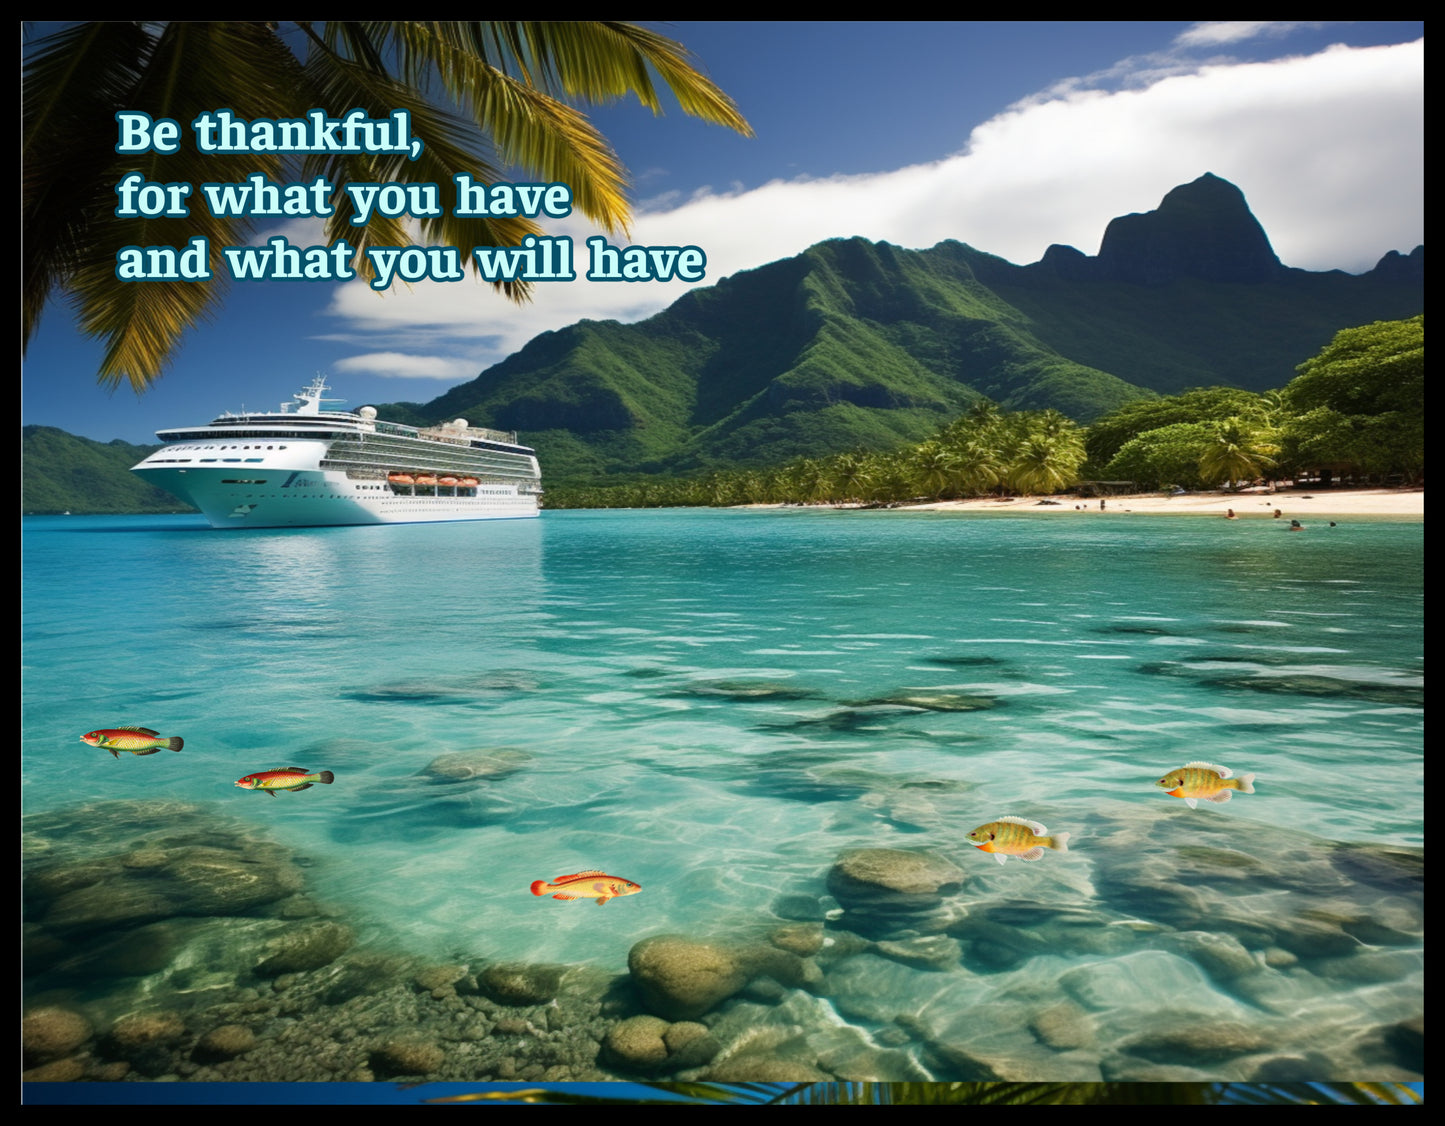 Be Thankful Digital Print of Cruise Ship Approaching Island Beach